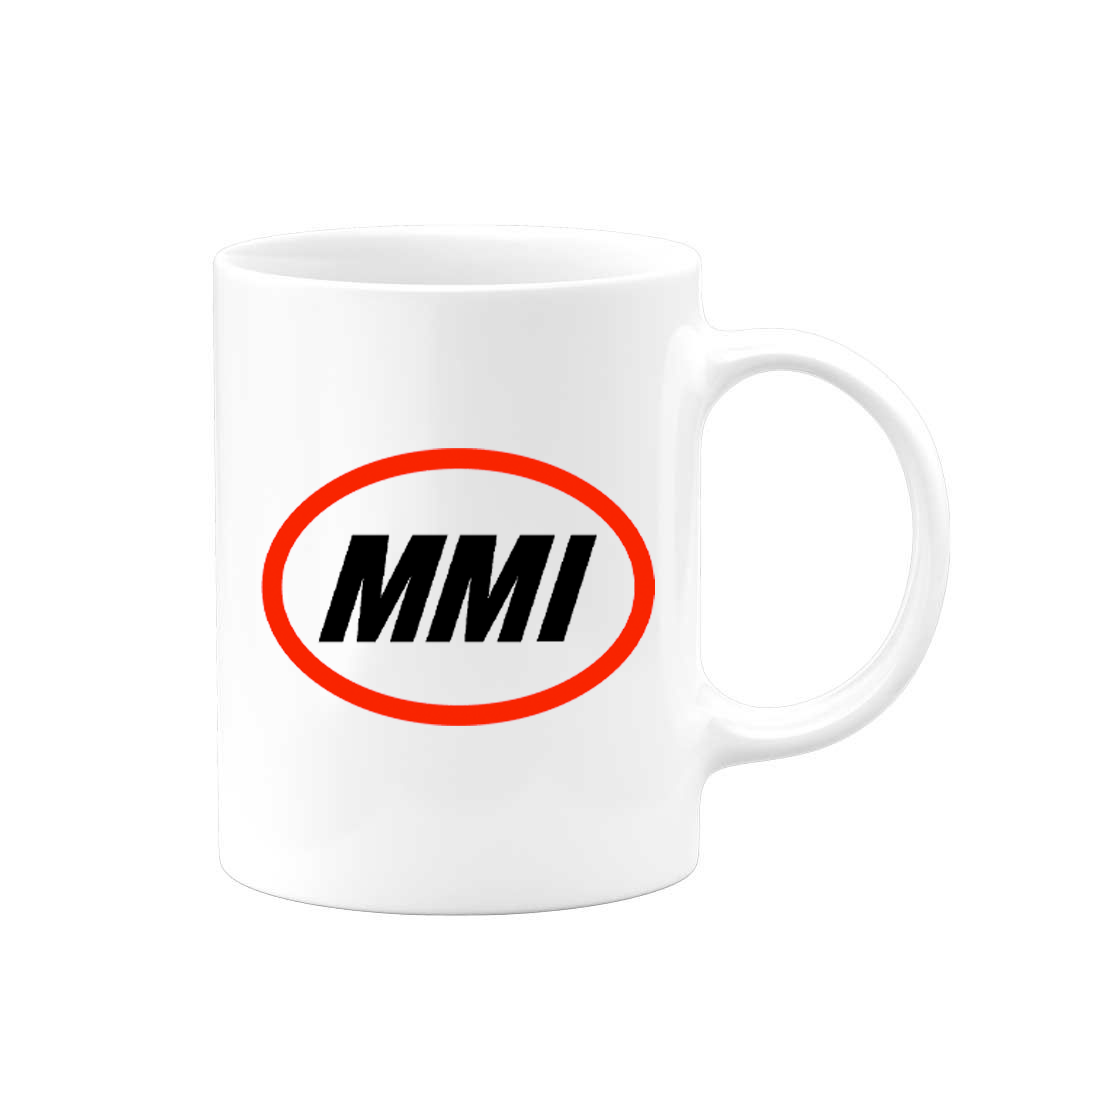 MMI (Moto) Mug